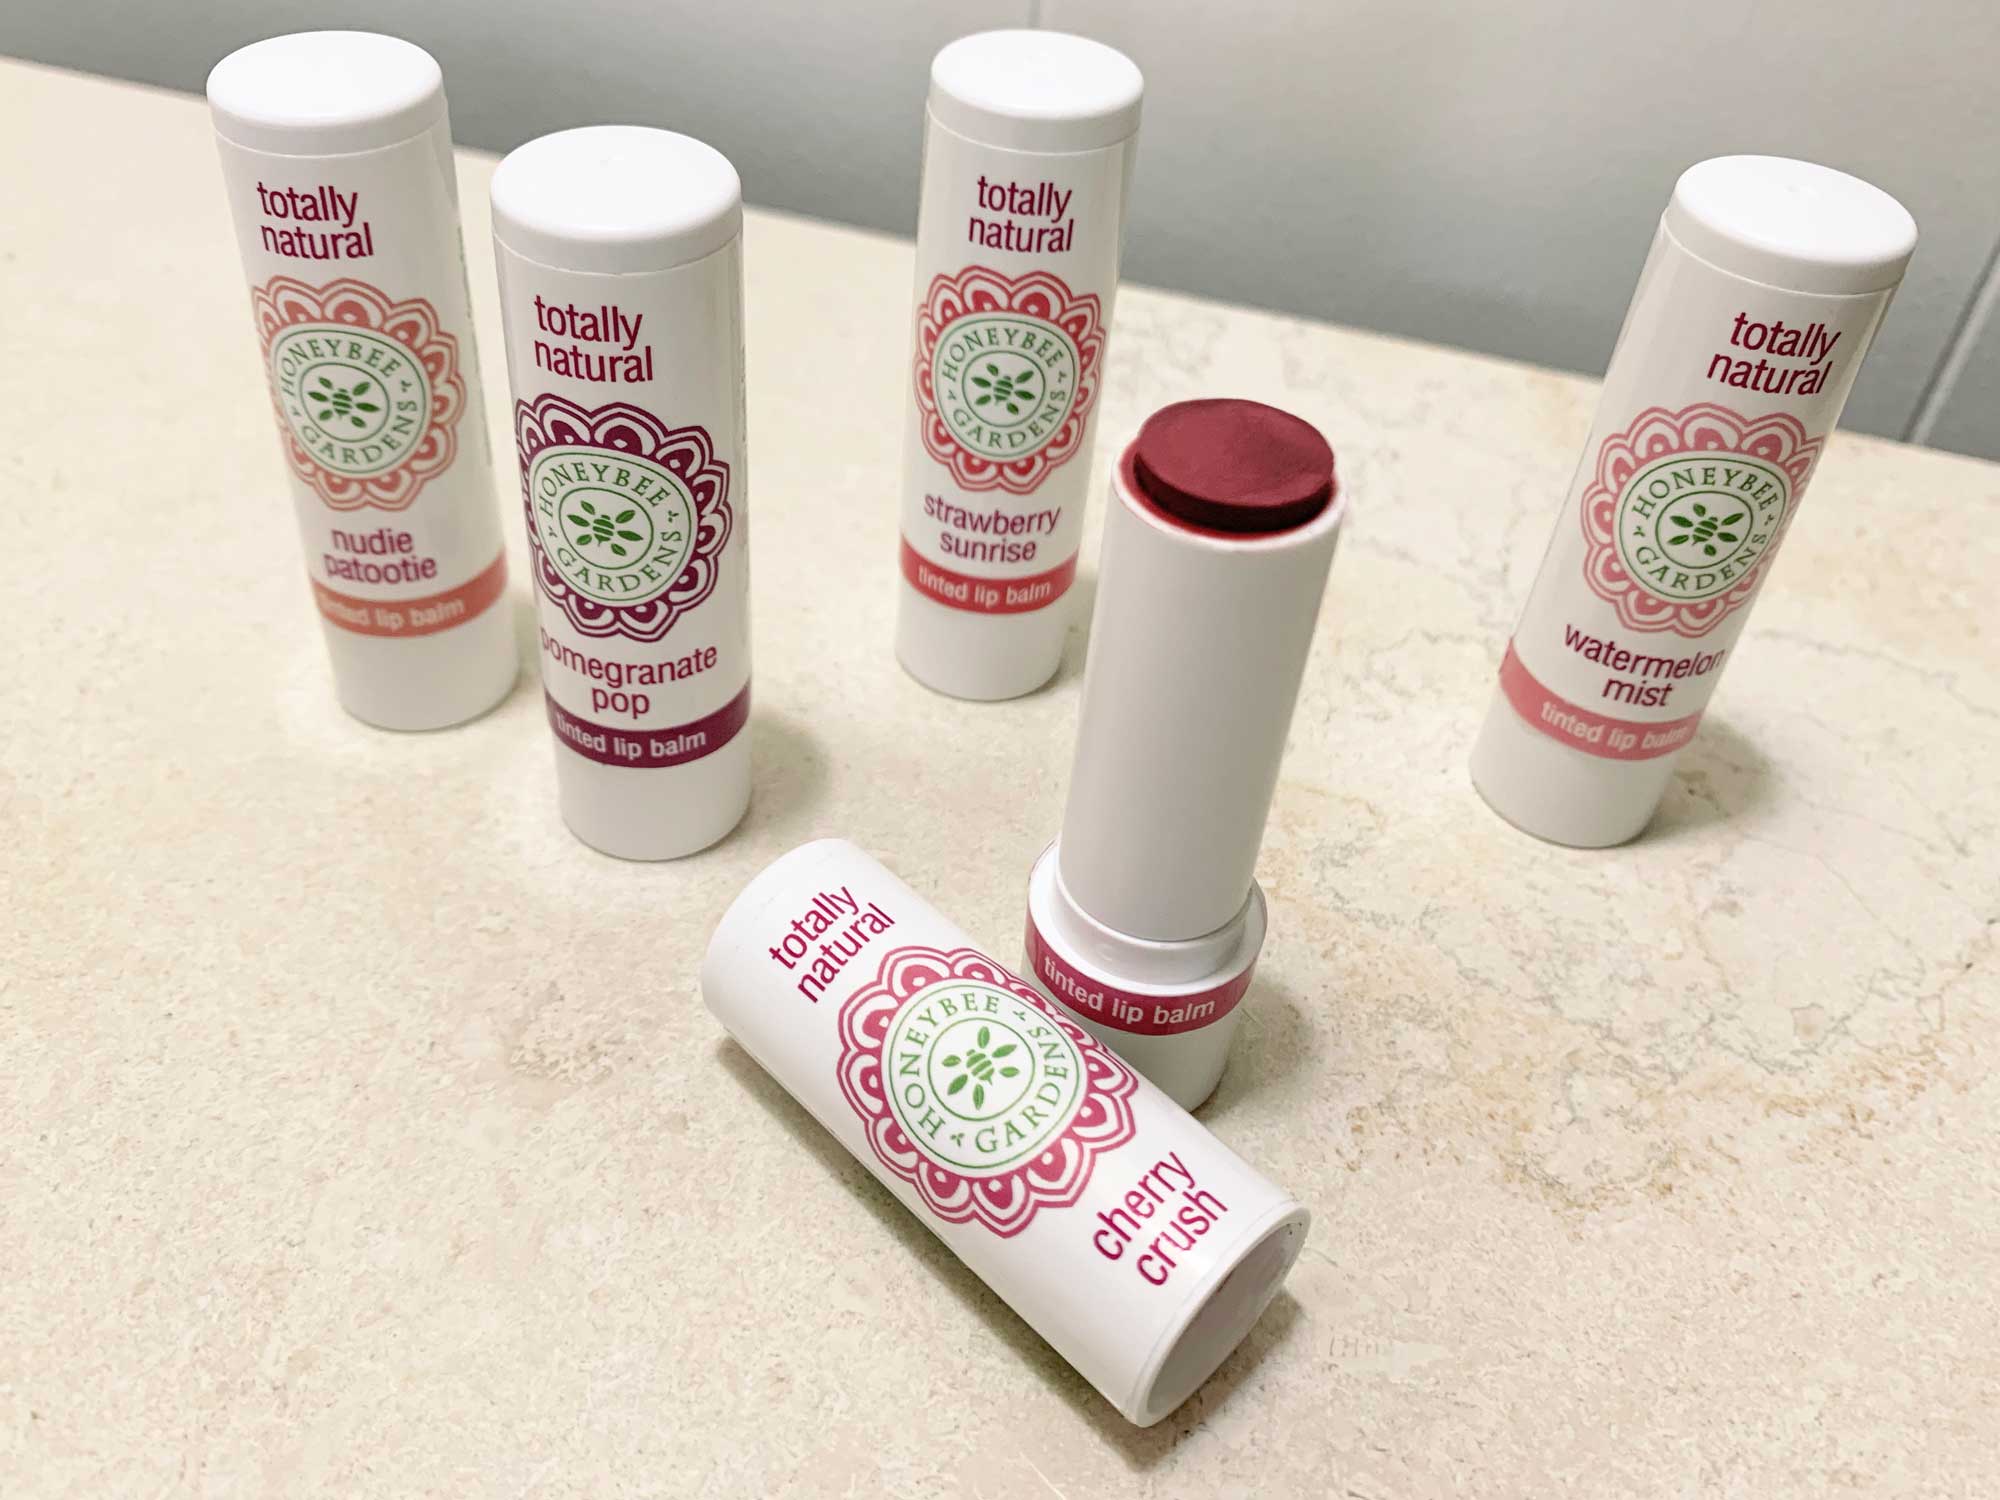 Honeybee Gardens packaging design for the Tinted Lip Balms